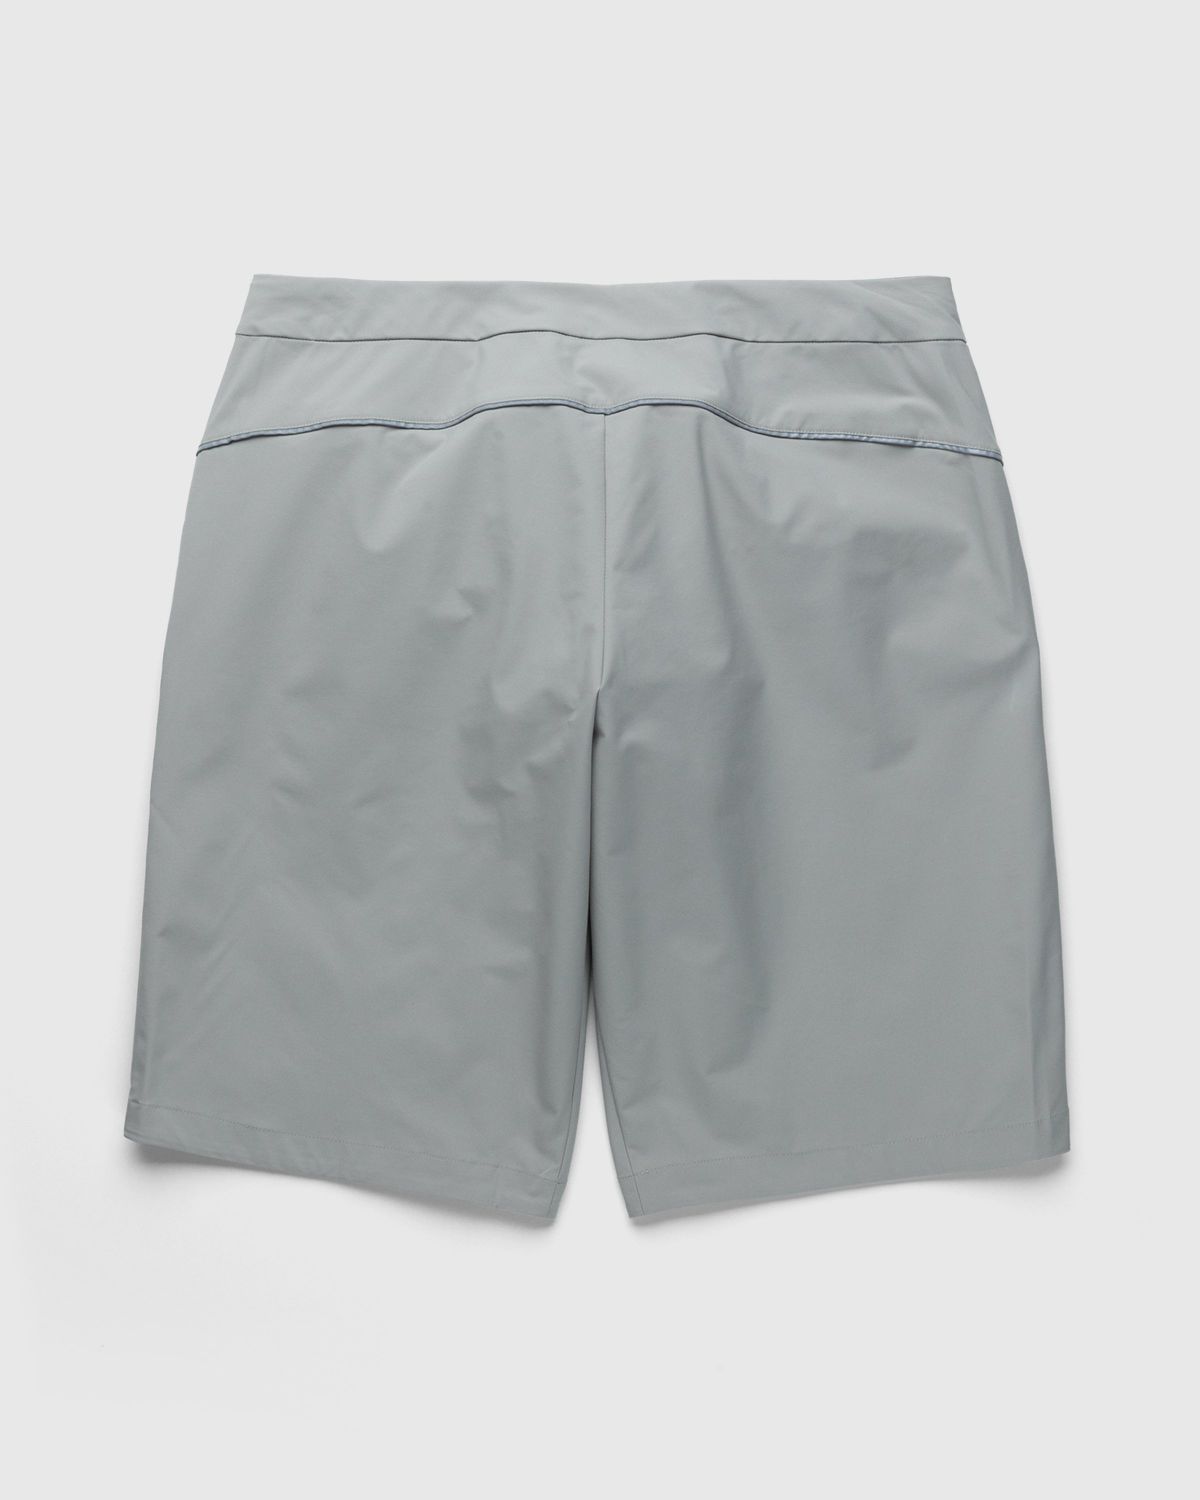 Adidas – Voyager Shorts Feather Grey/Savanna - Active Shorts - Beige - Image 2